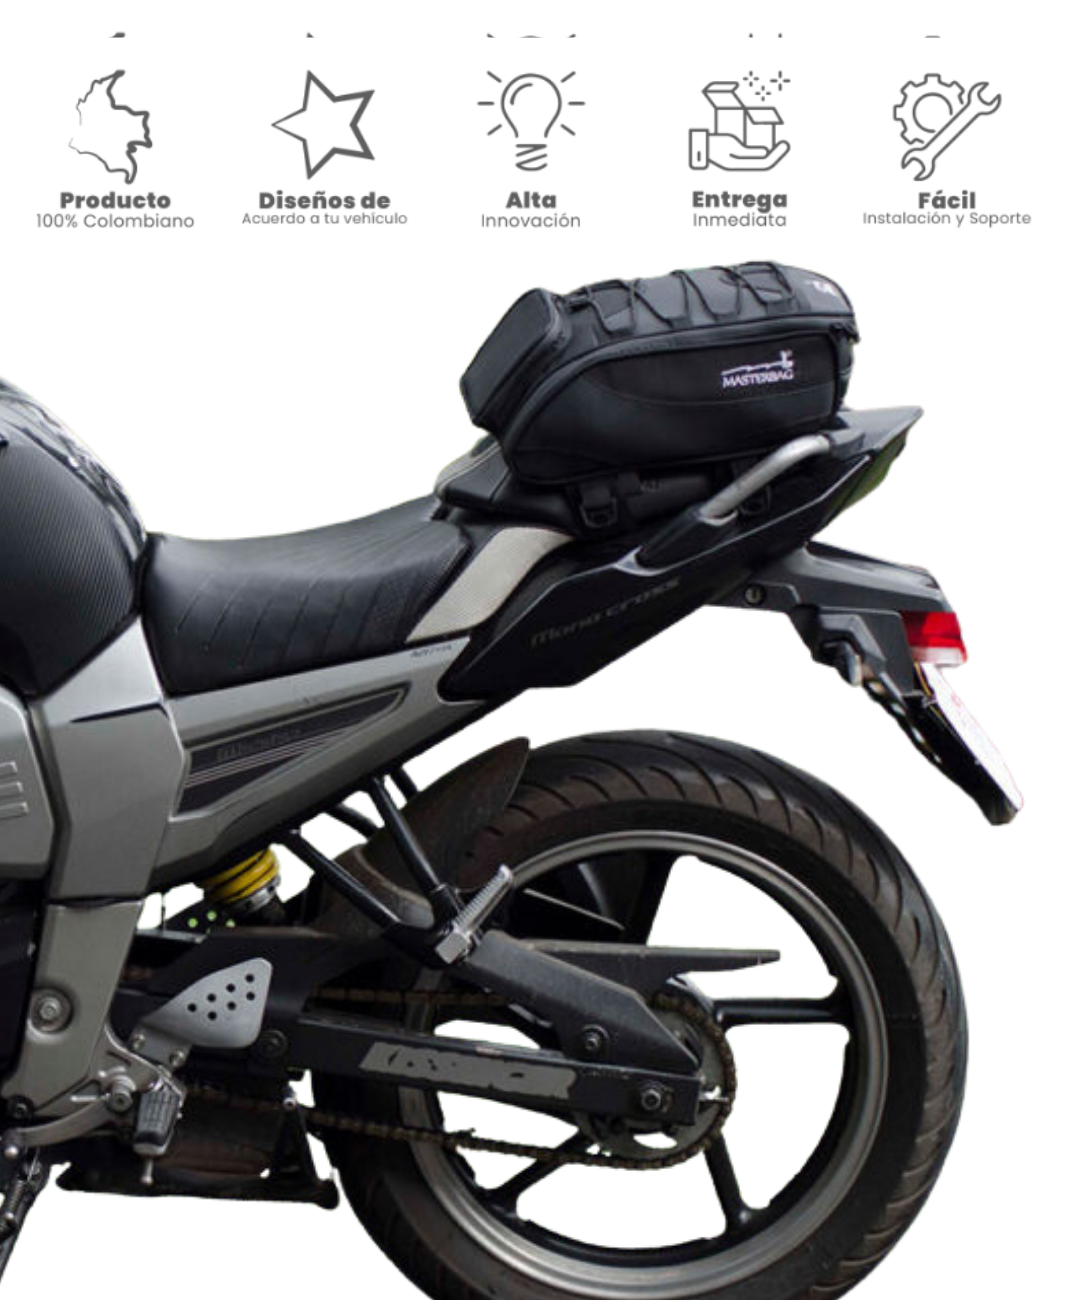 PortaImpermeable Edge | Maleta Impermeable para Motocicleta